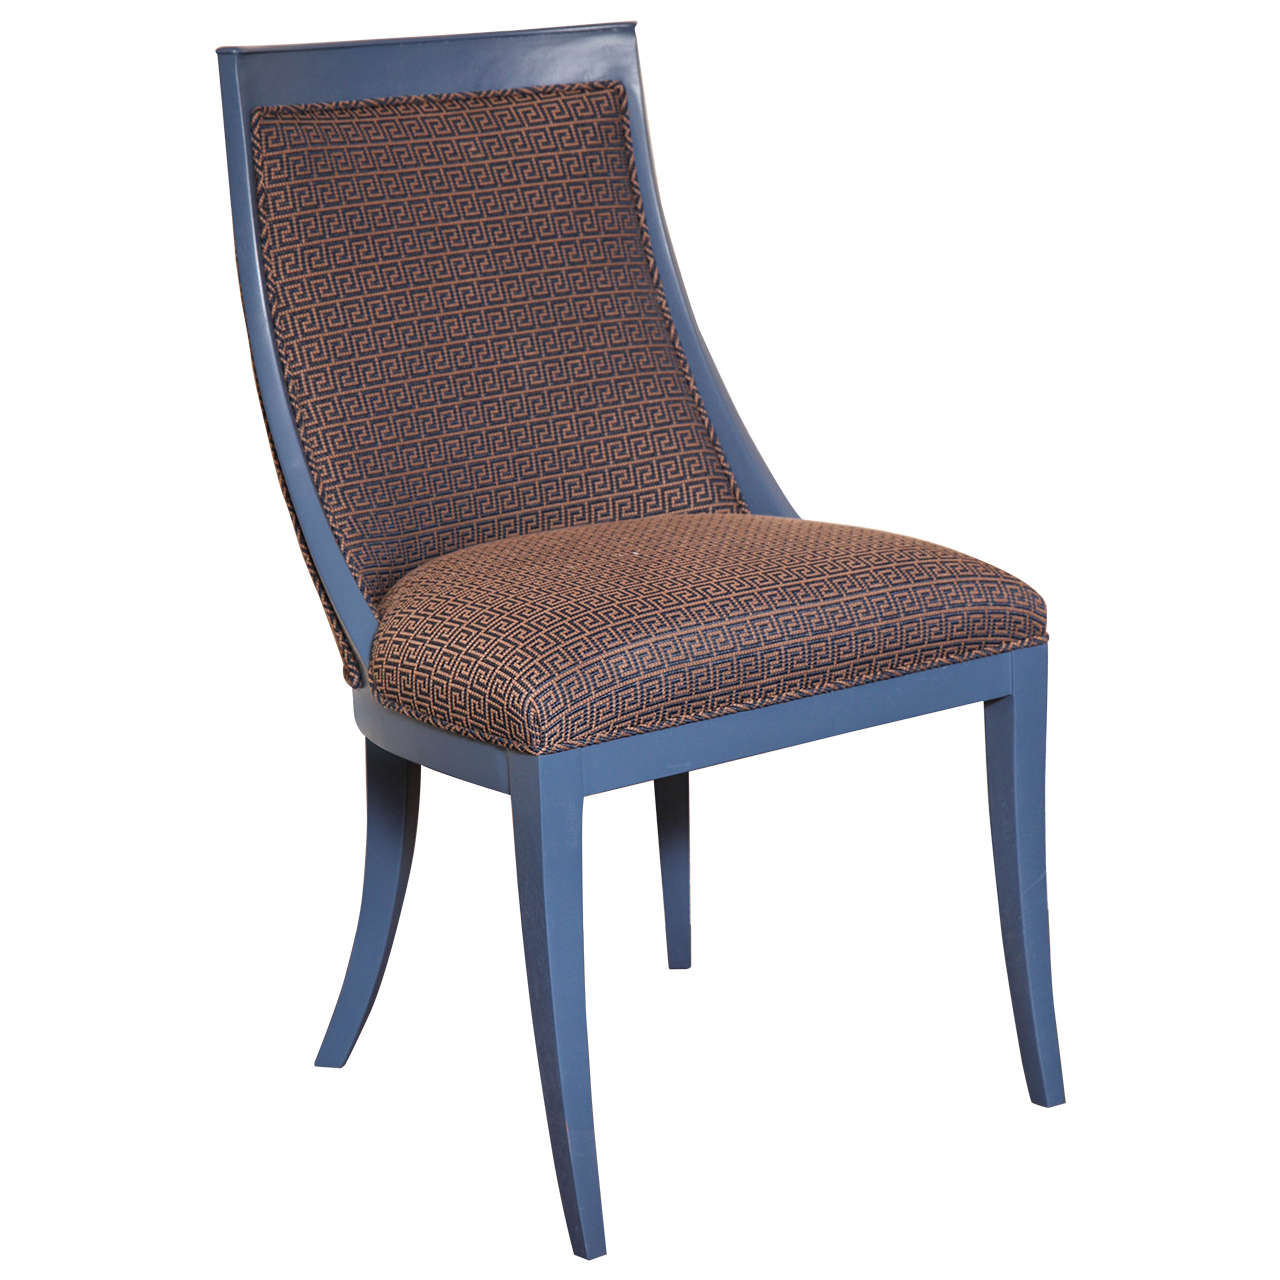 Greek Key Art Deco Chair For Sale